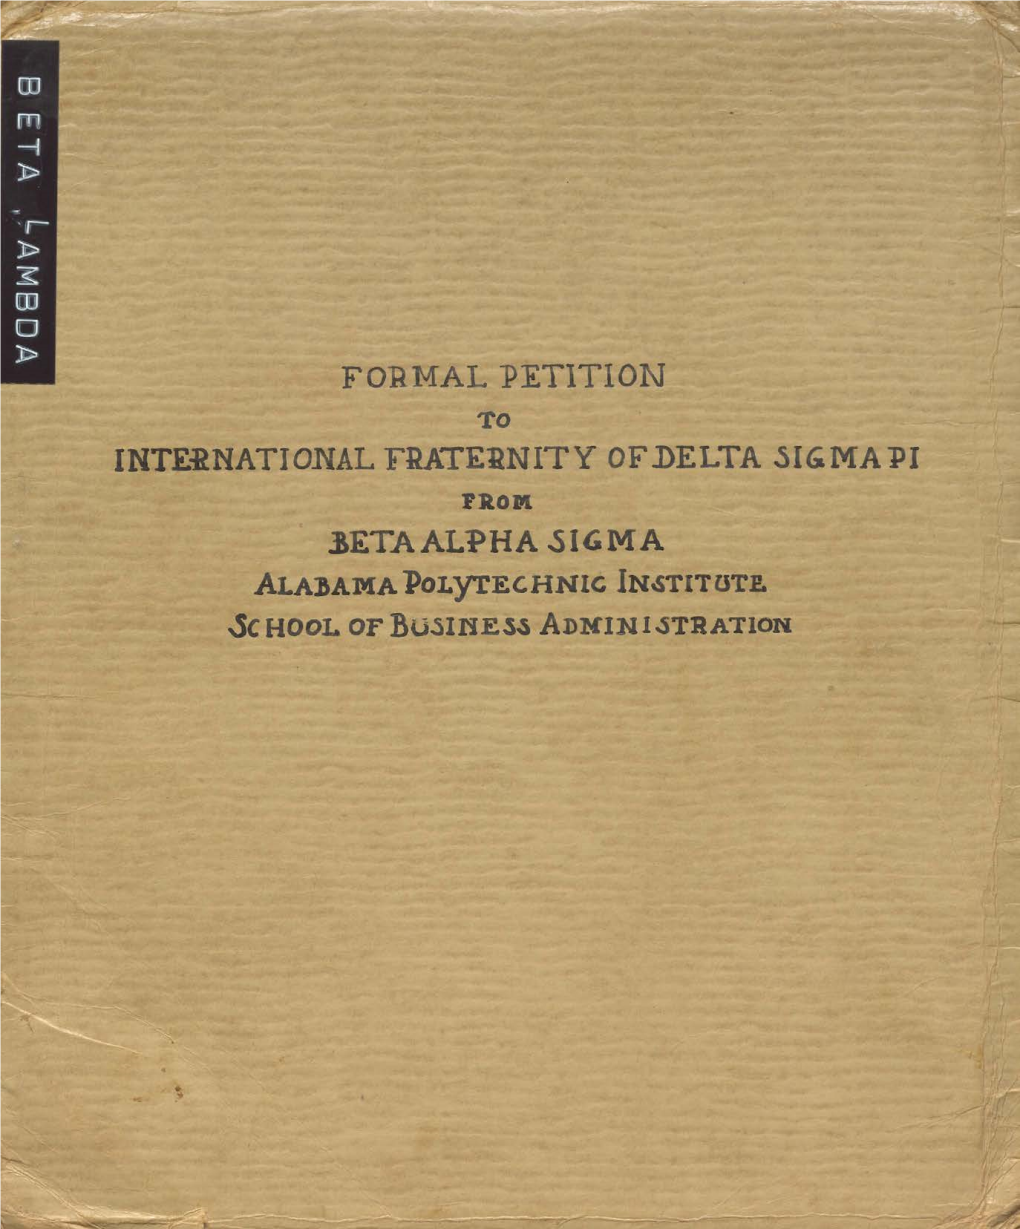 Alabama Polytechnic Inctitute >School Ofbu^Imes's Adkim I Stration to the INTERNATIONAL FRATERNITY of DELTA SIGMA PI